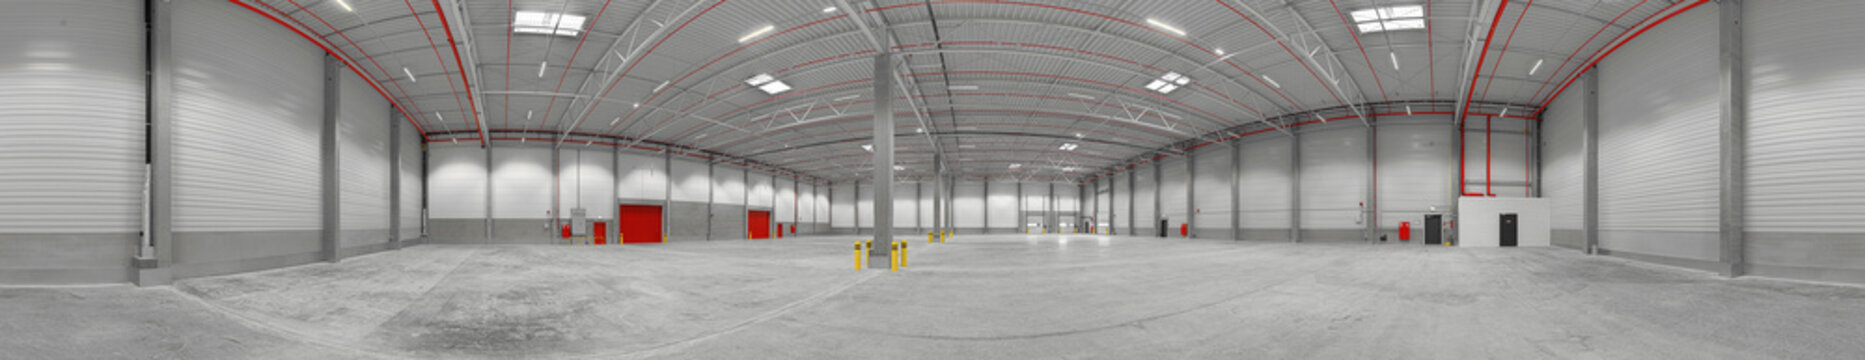 logistics hall new empty 360° panorama